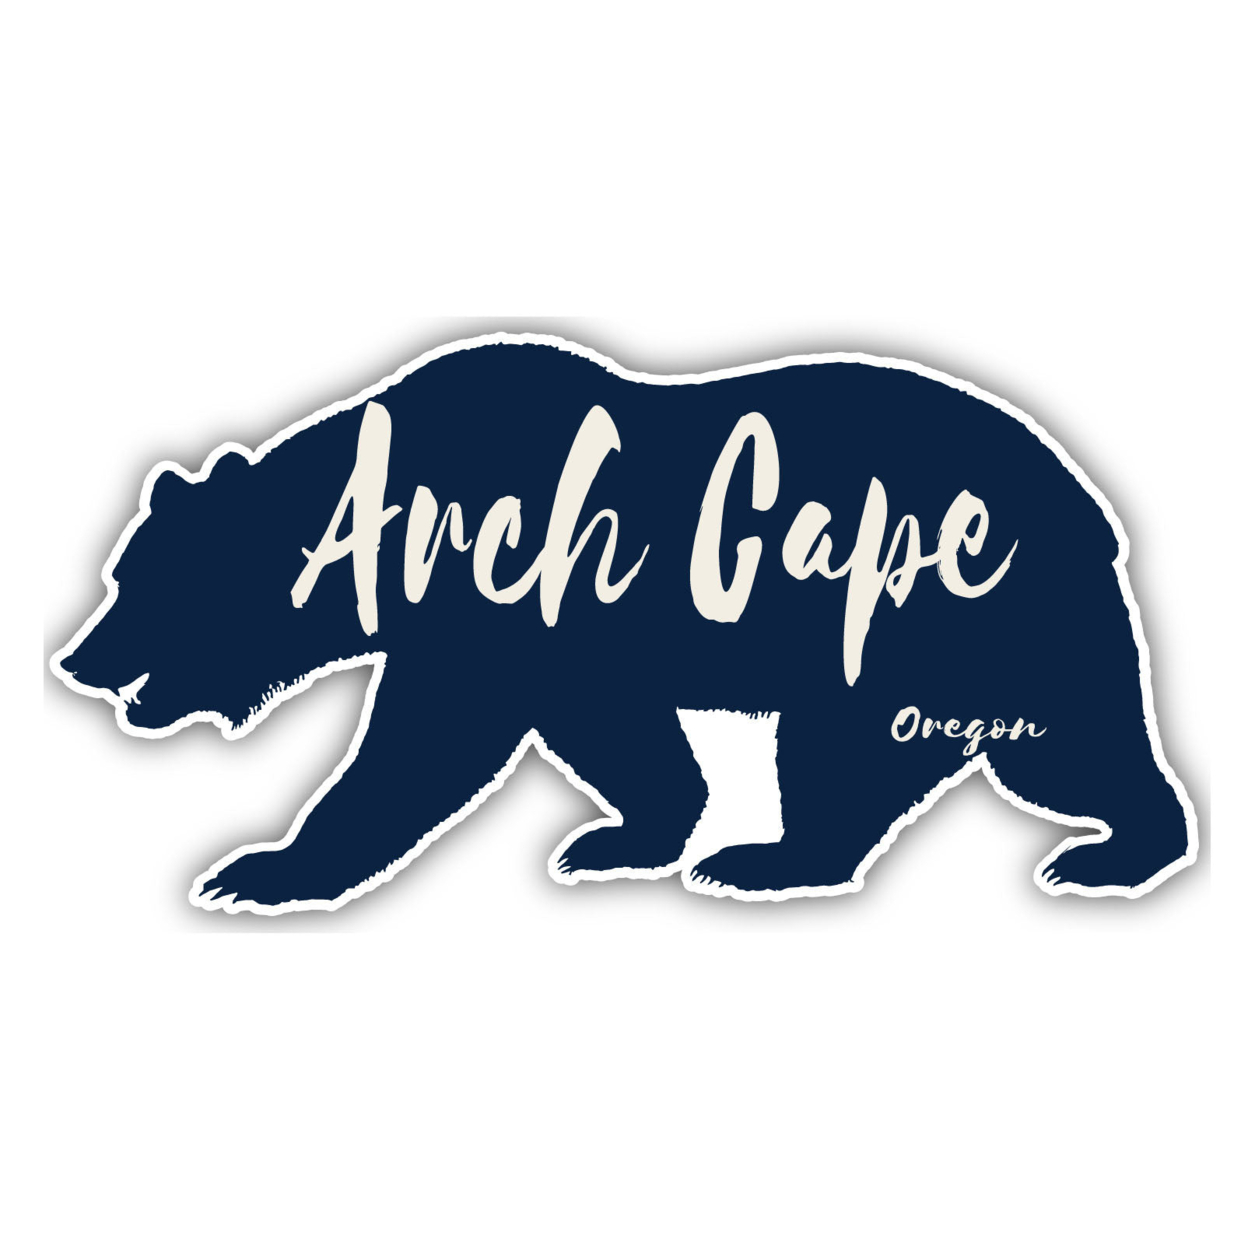 Arch Cape Oregon Souvenir Decorative Stickers (Choose Theme And Size) - 4-Pack, 10-Inch, Bear